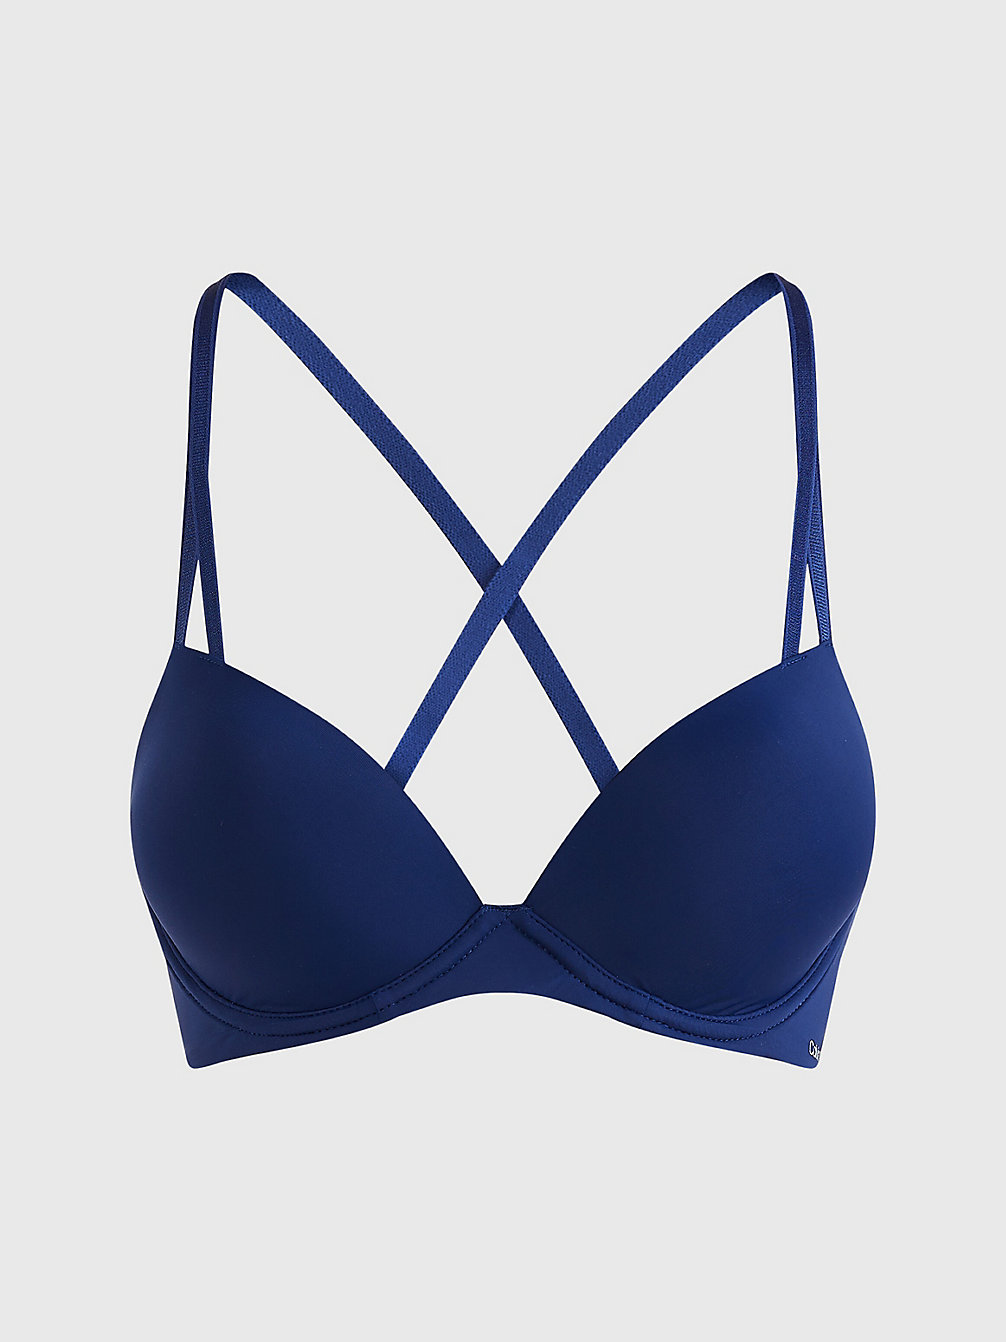 BLUE DEPTHS Push-Up T-Shirt Bra - Seductive Comfort undefined women Calvin Klein